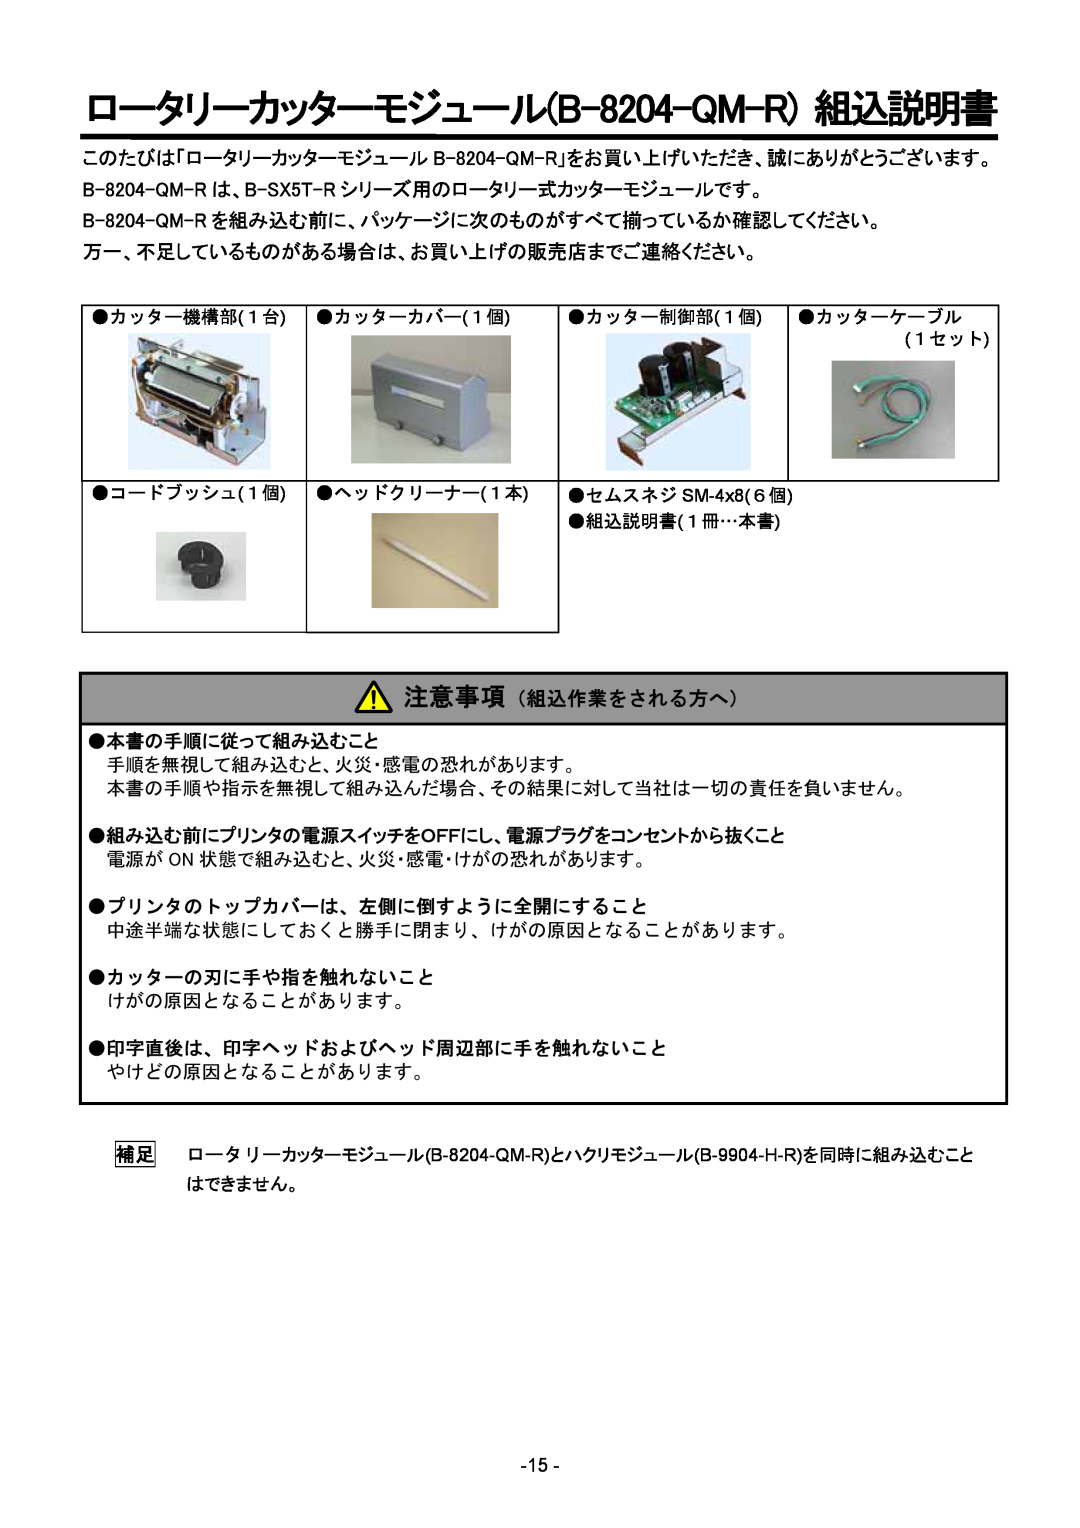 Toshiba 注意事項（組込作業をされる方へ）, ロータリーカッターモジュールB-8204-QM-R組込説明書, 本書の手順に従って組み込むこと, プリンタのトップカバーは、左側に倒すように全開にすること 